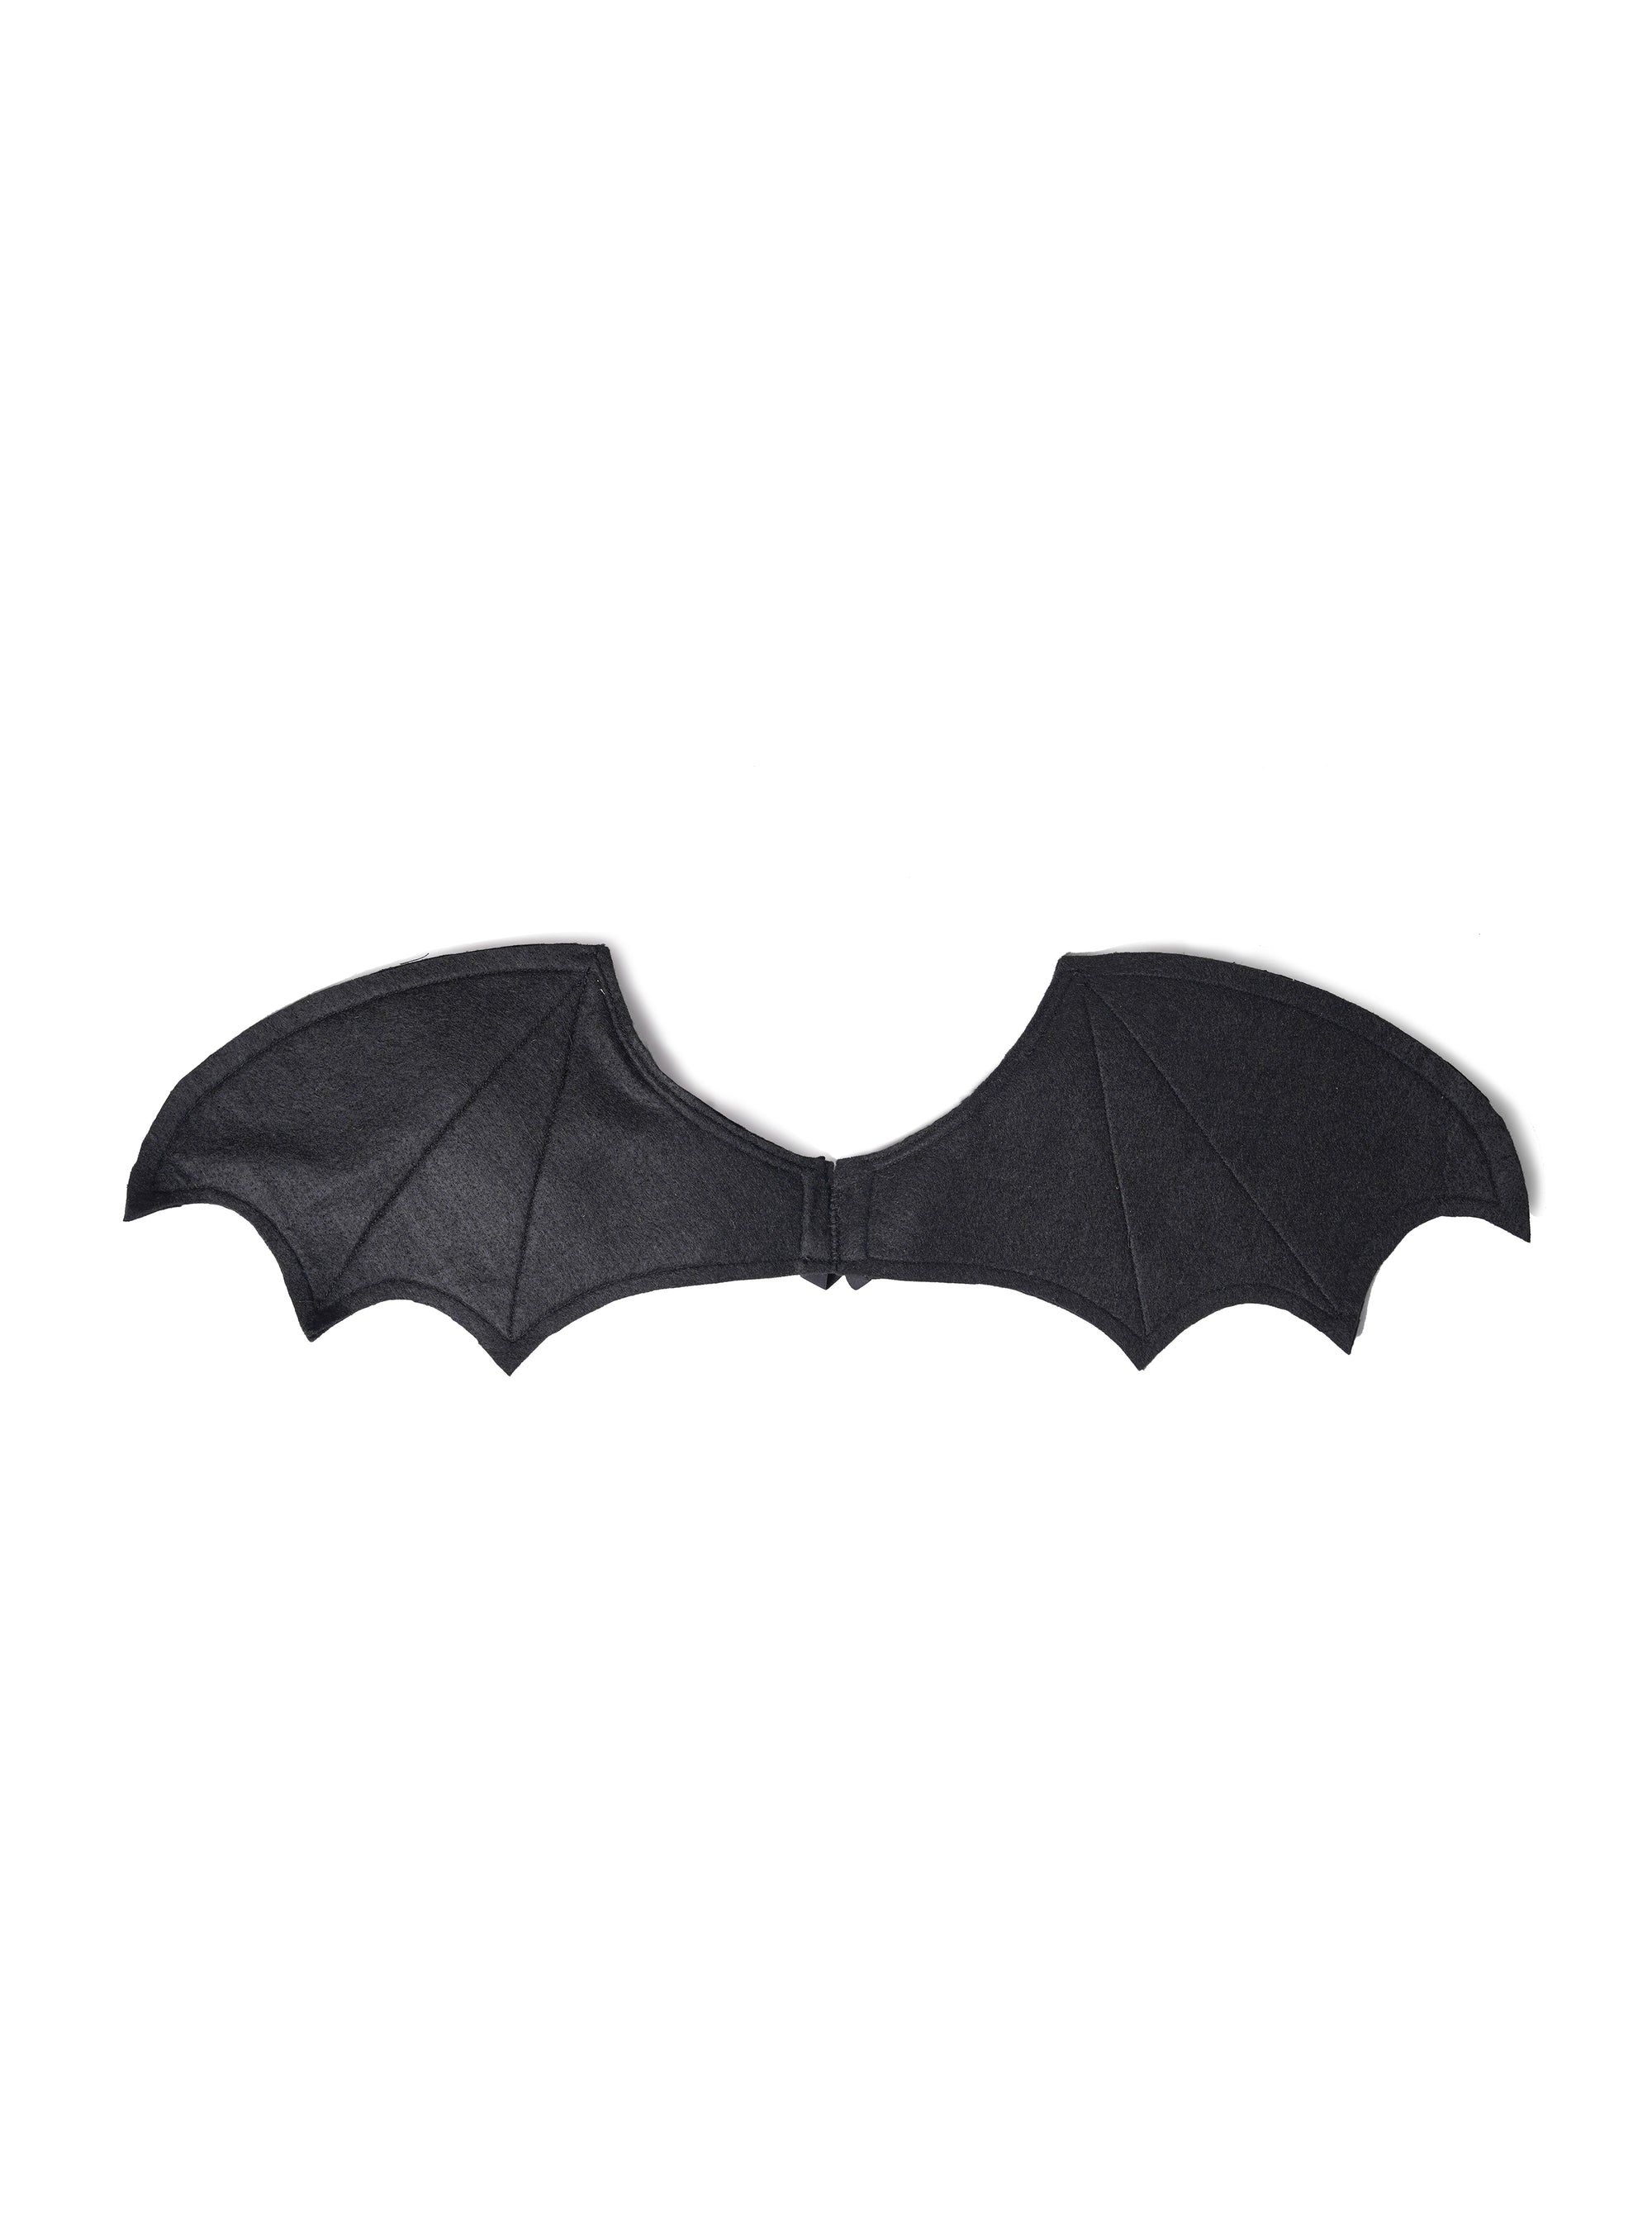 adjustable Halloween bat wing